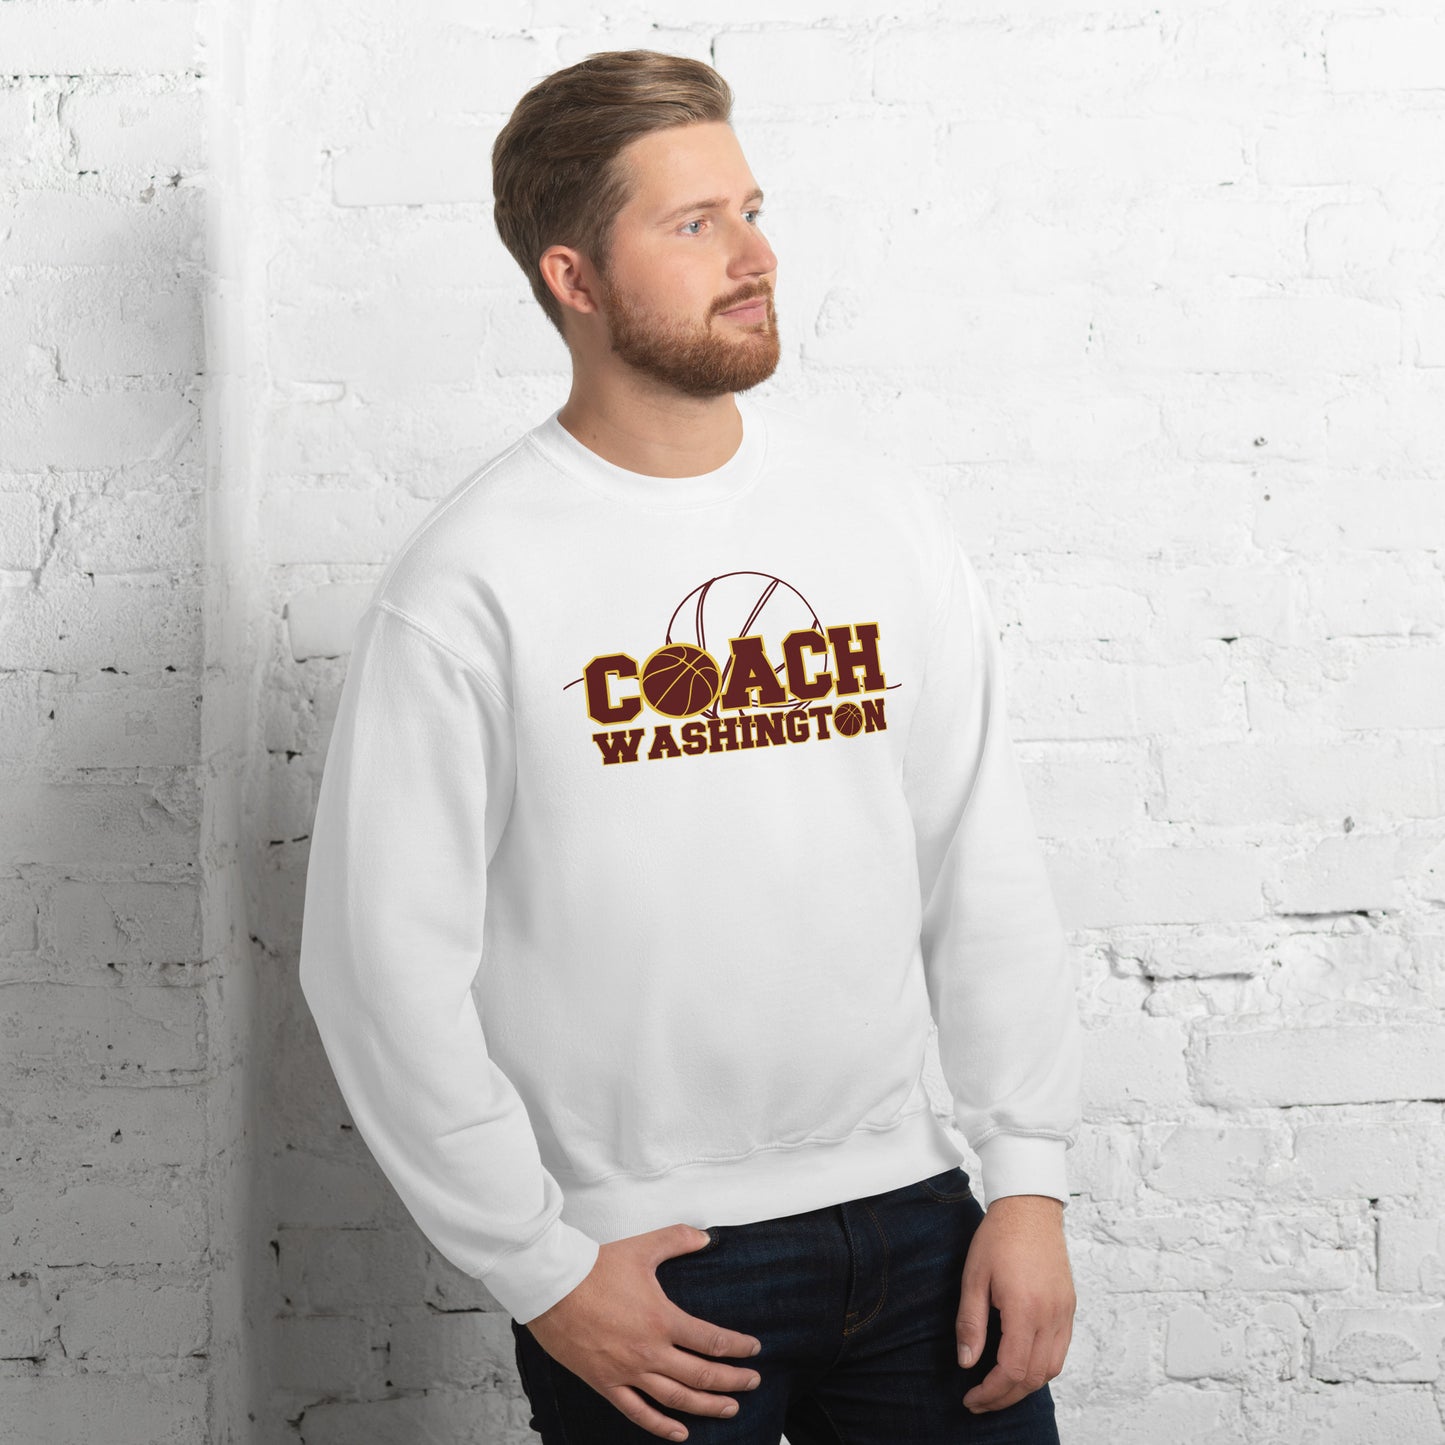 Coach Washington Sweatshirt